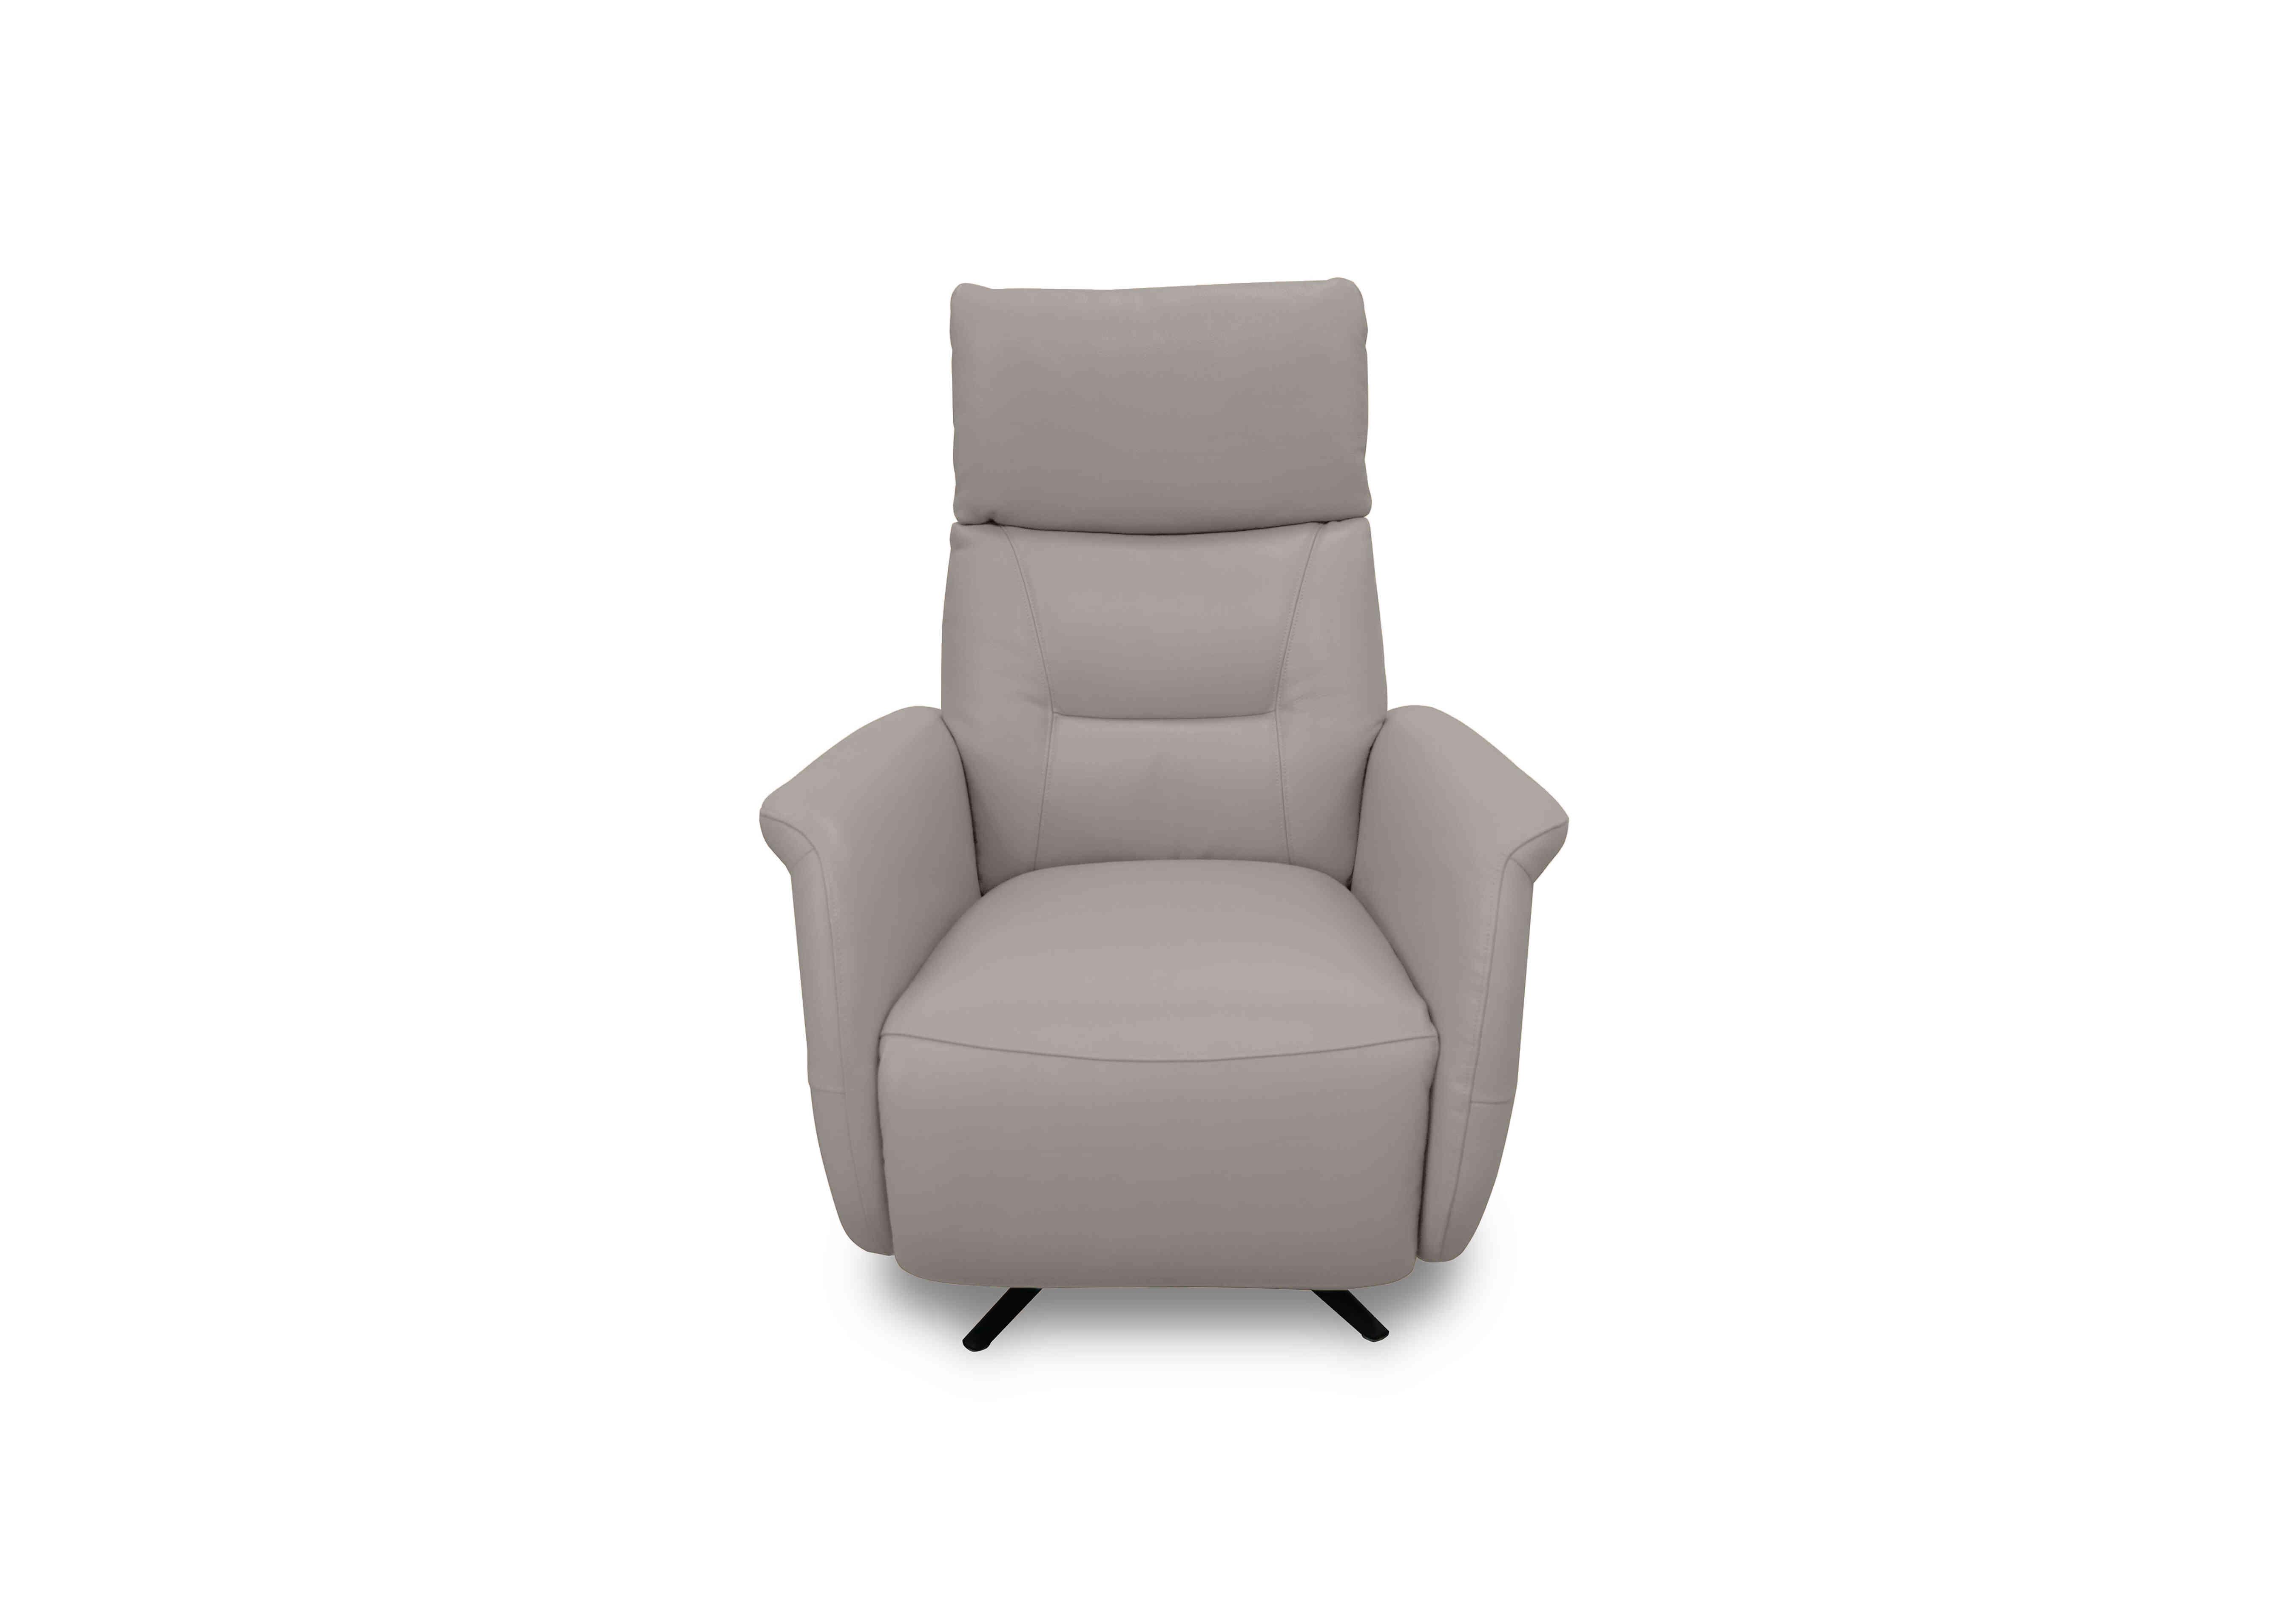 Designer Chair Collection Dusseldorf Leather Power Recliner Swivel Chair in Bv-946b Silver Grey on Furniture Village